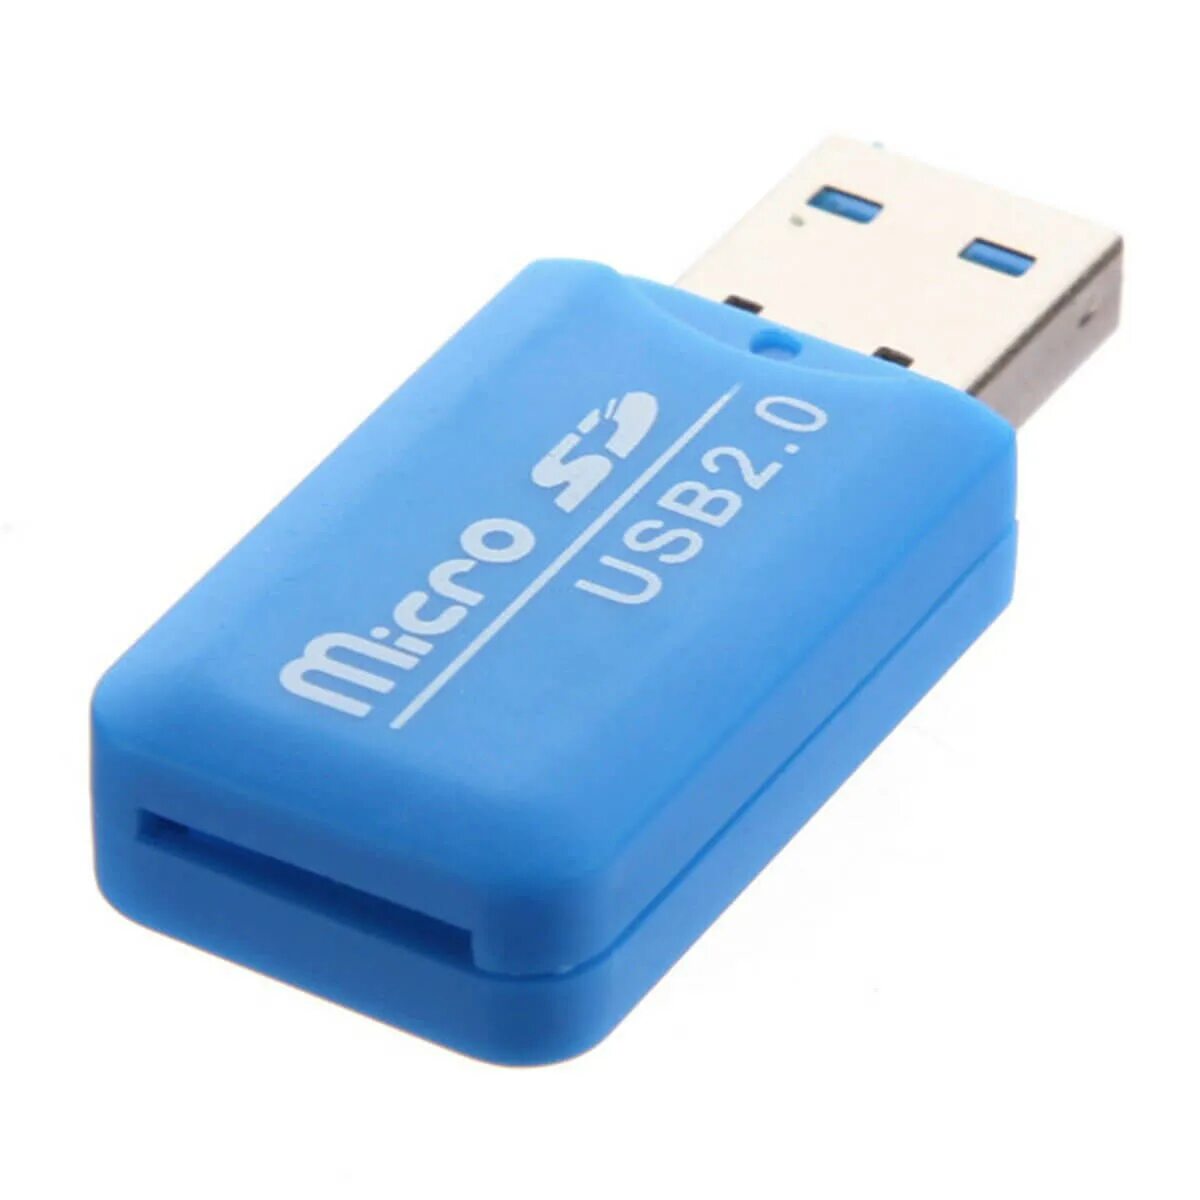 Авито купить переходник. Адаптер USB 3.0 микро SD. Card Reader 2 SD 2 MICROSD. Адаптер микро SD карта TF кард-ридер USB. Картридер для микро SD USB 2.0.